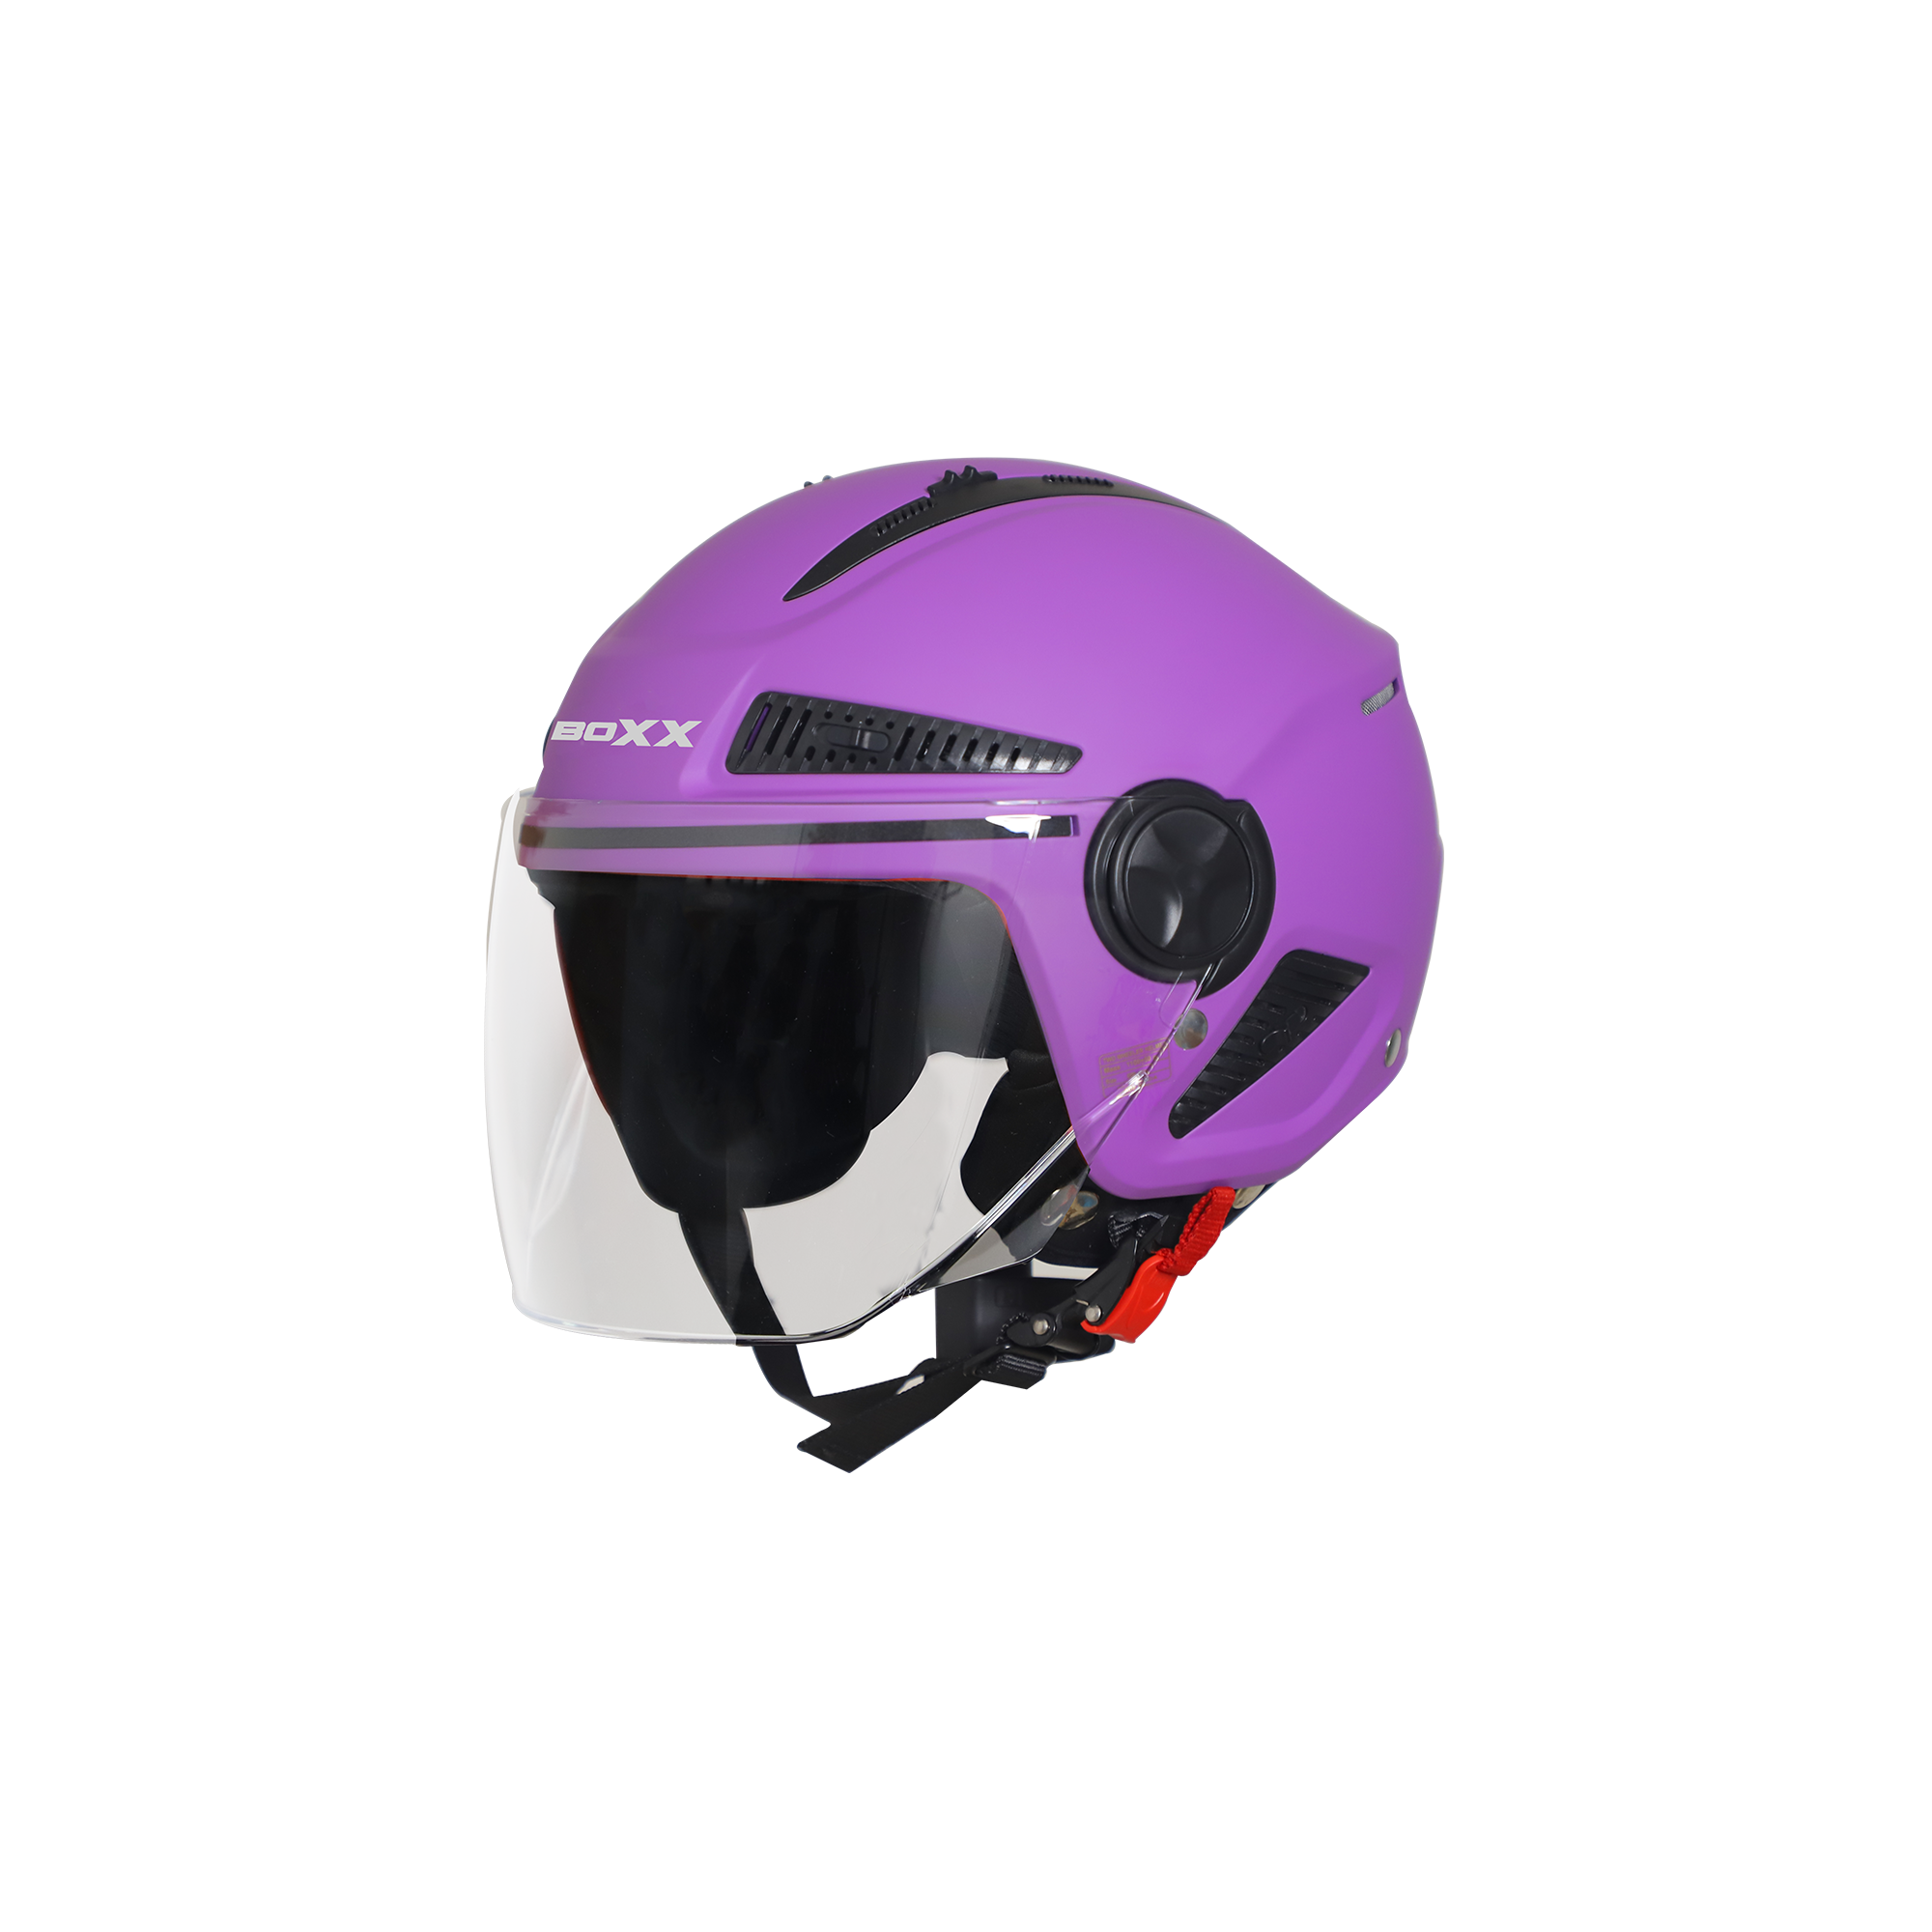 Steelbird SBH-24 Boxx ISI Certified Open Face Helmet For Men And Women (Matt Violet With Clear Visor